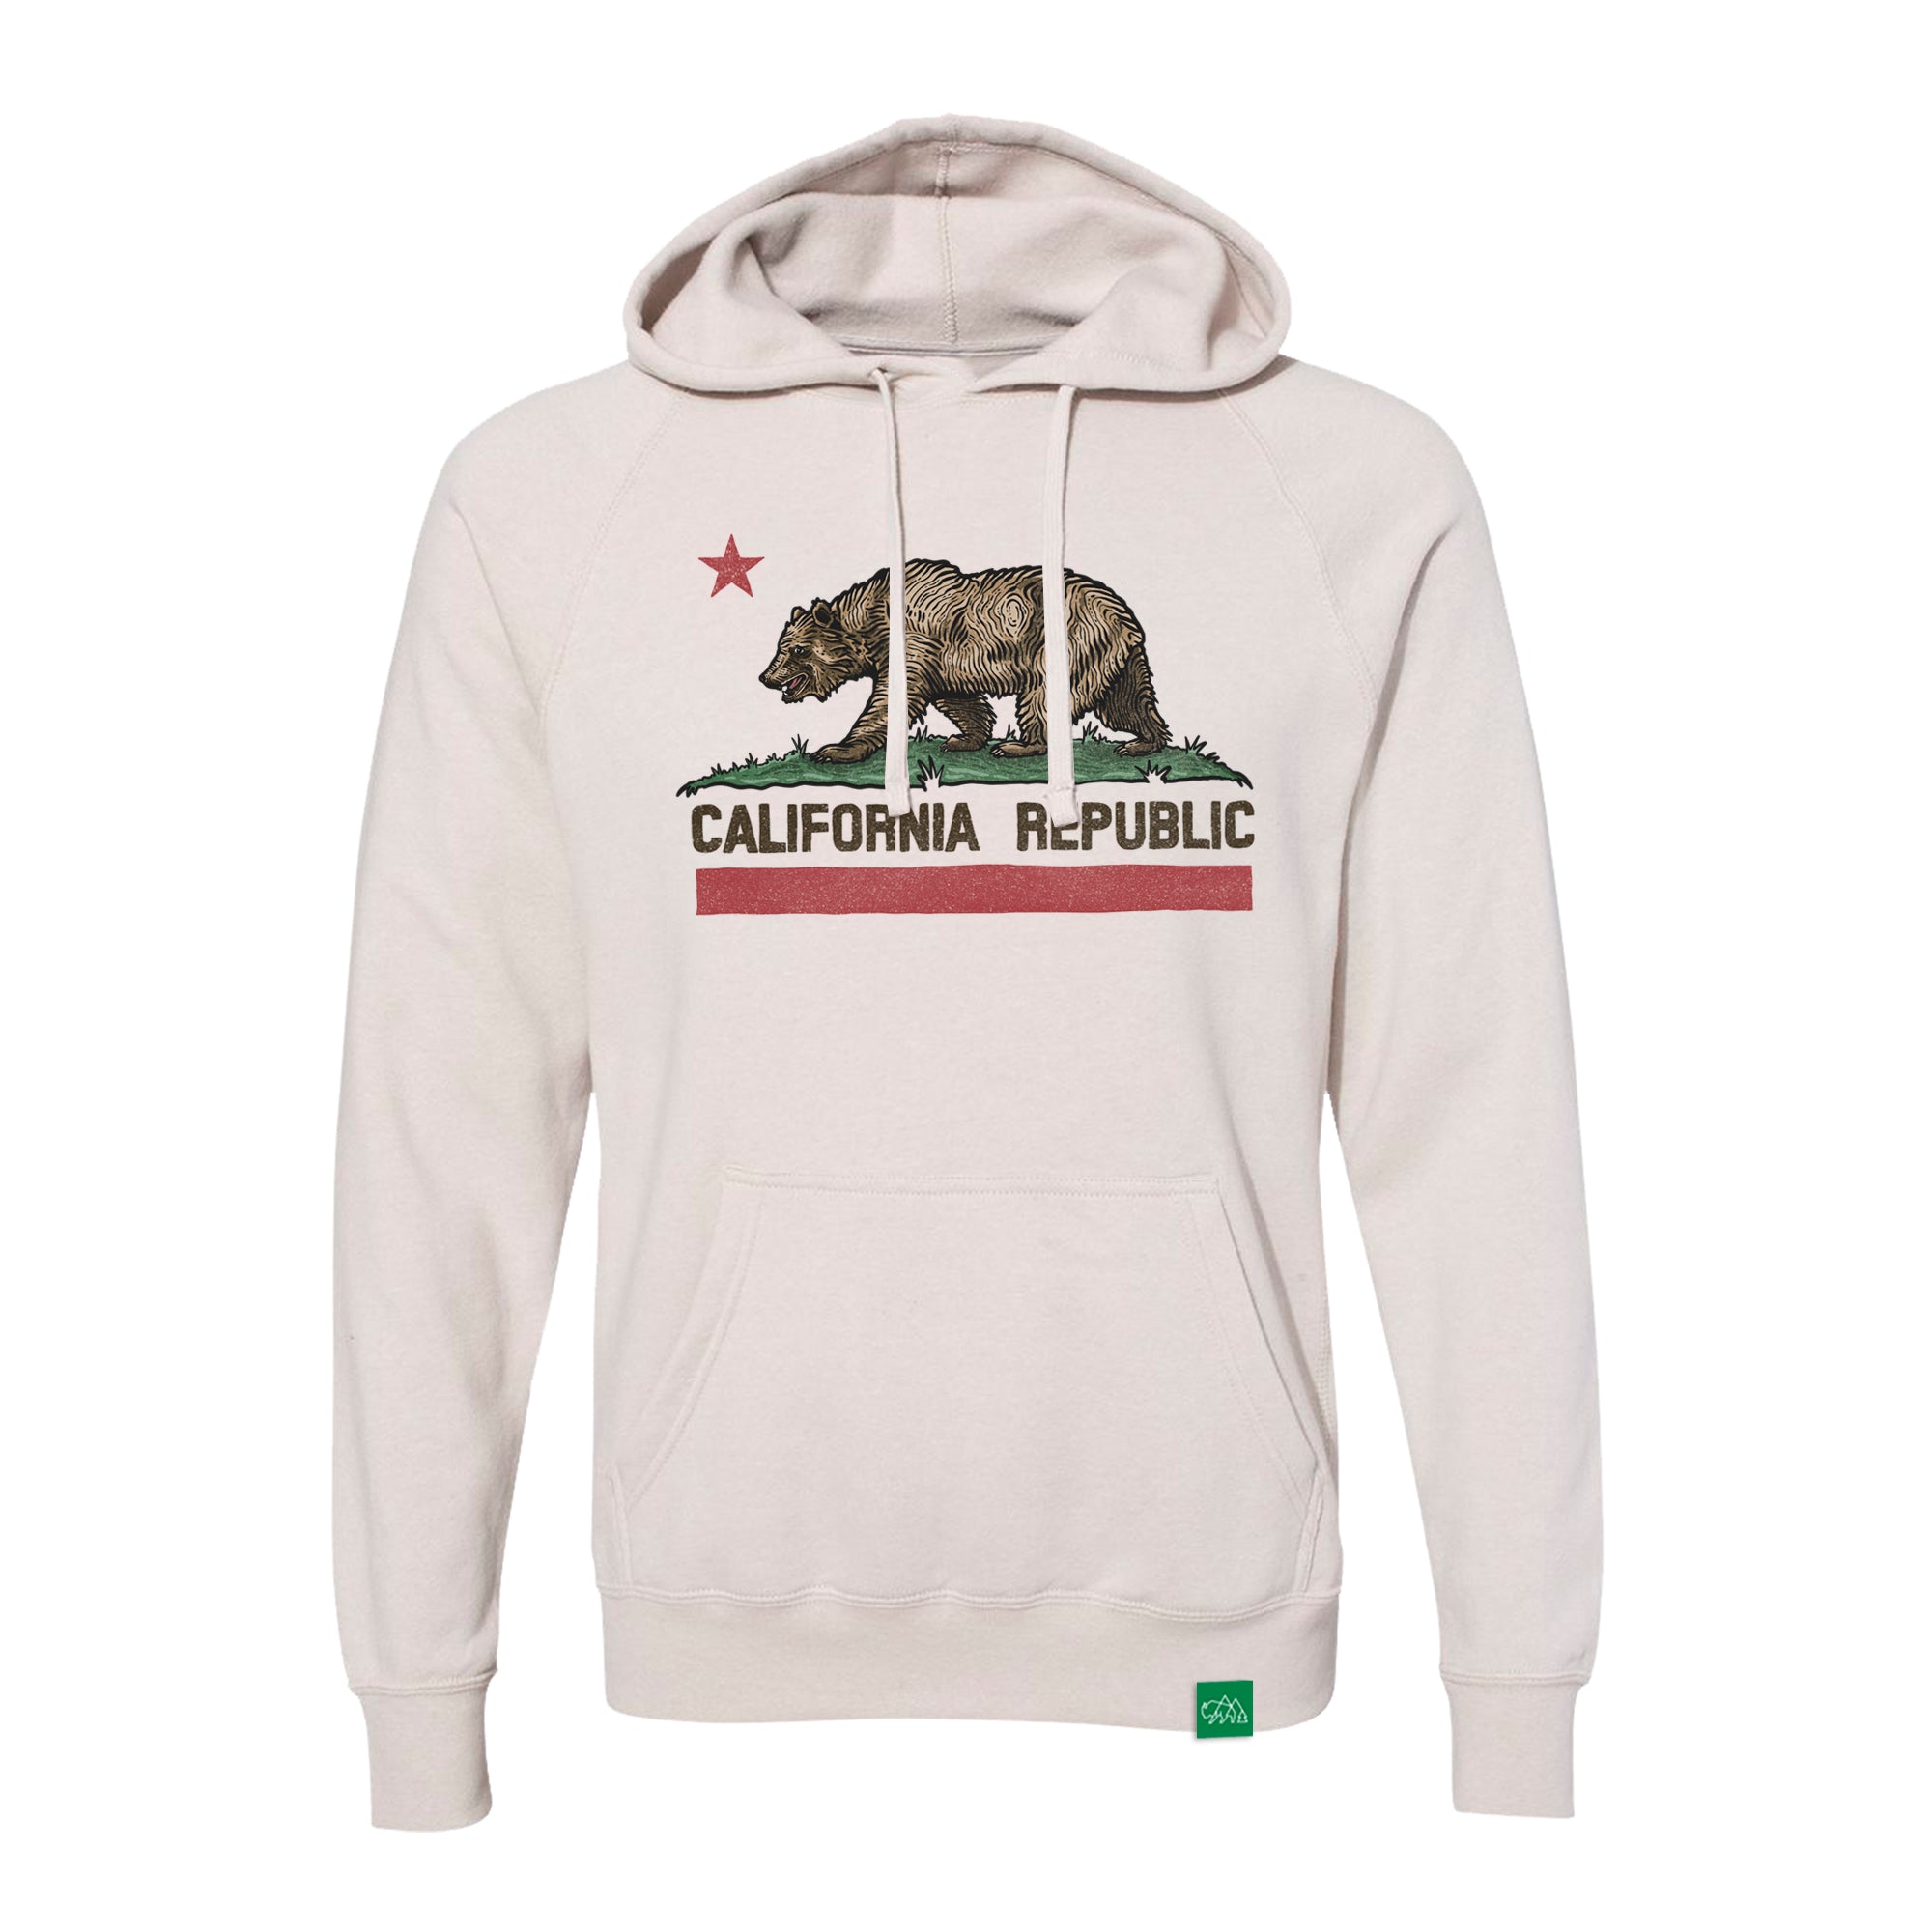 Republic of California Hoodie Sweatshirt